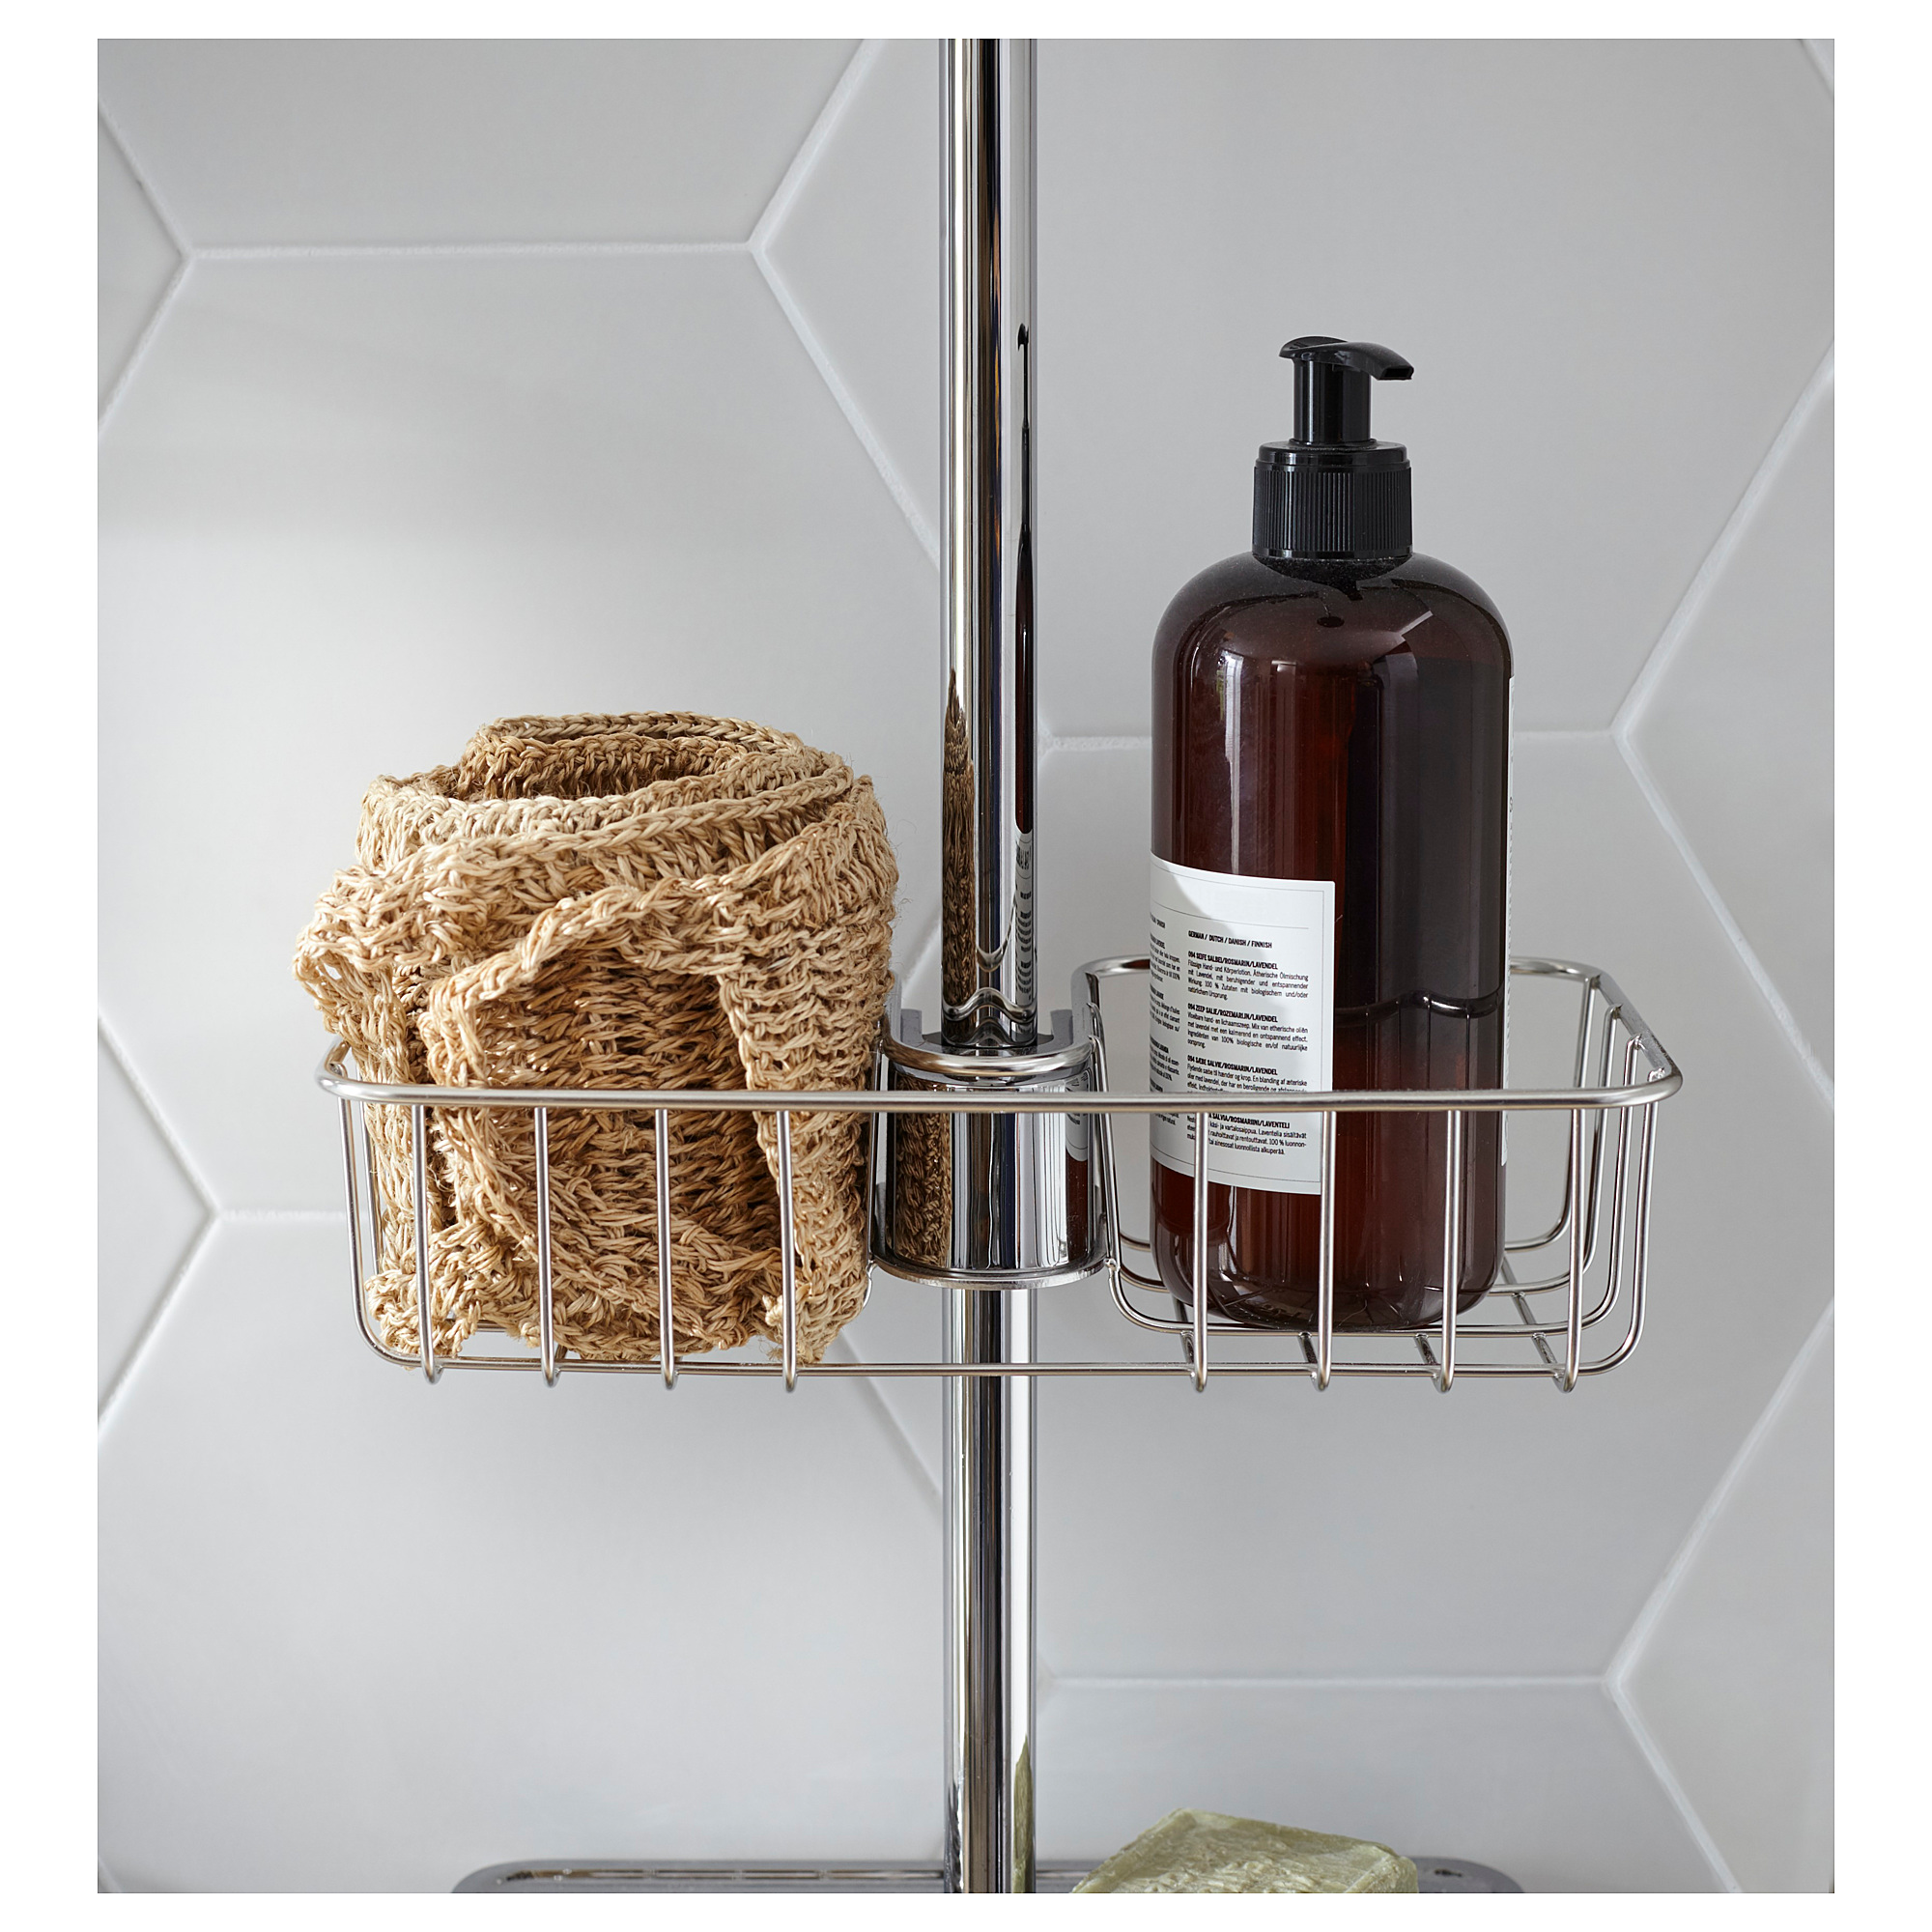 VOXNAN shower shelf